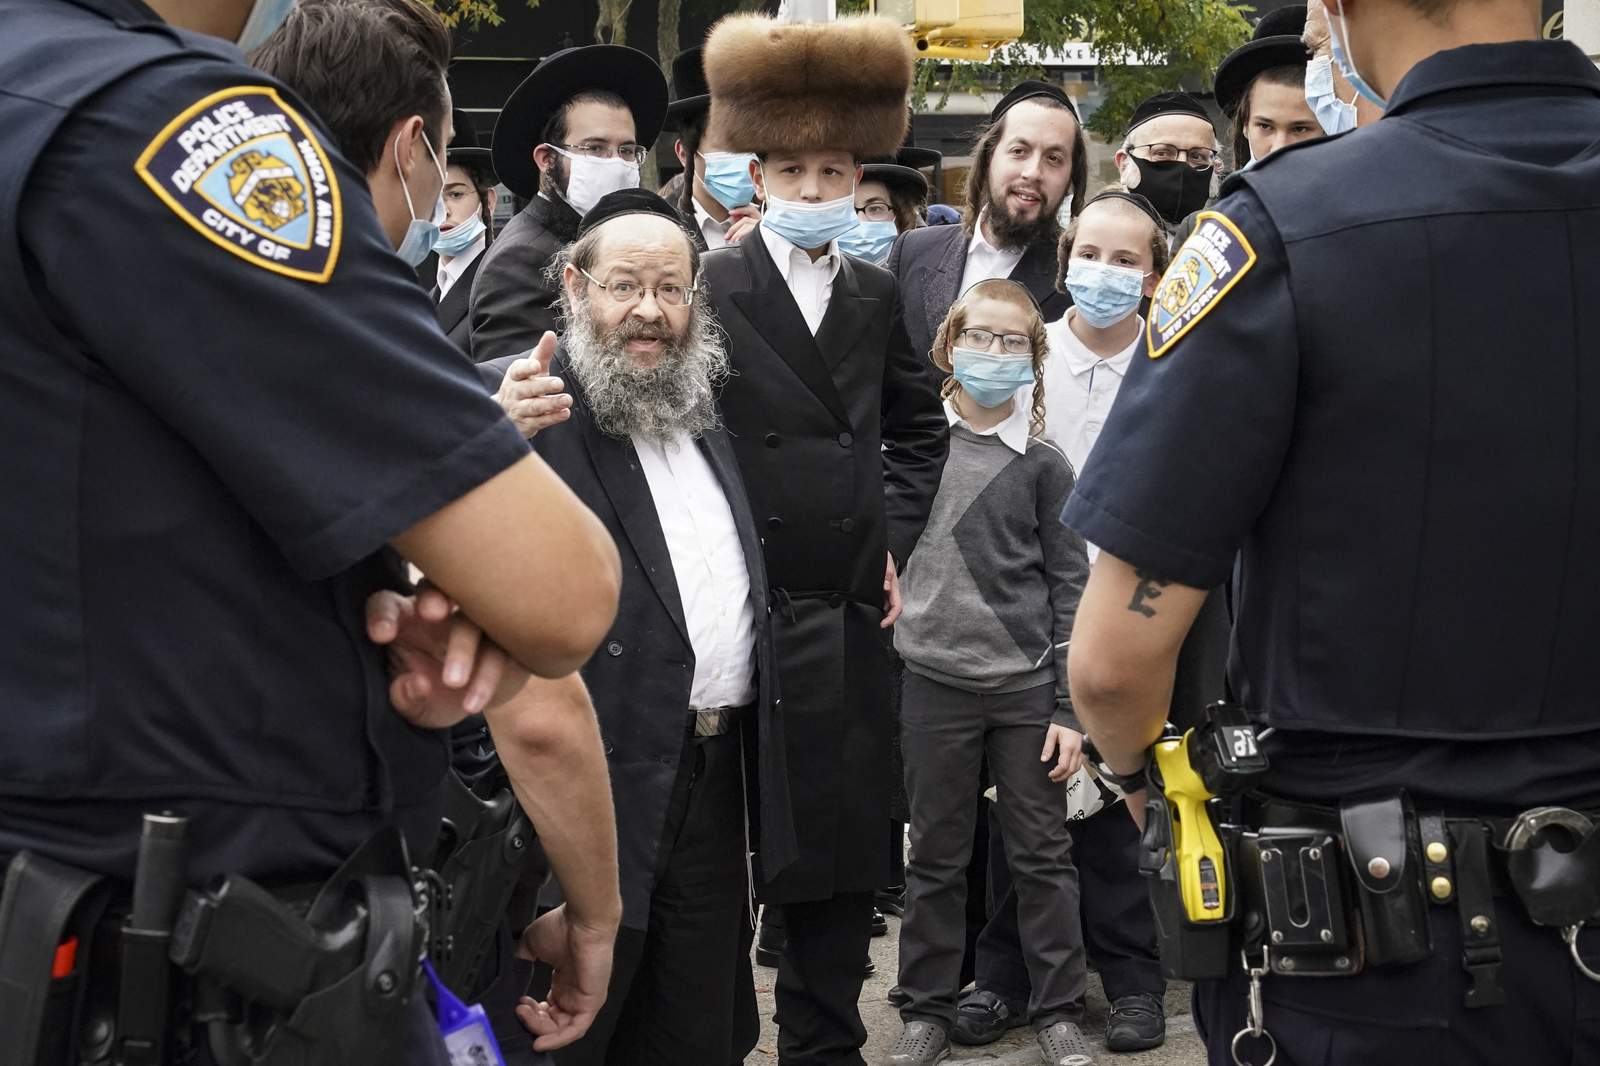 Amid NYC protests, Orthodox Jews urge new virus-era dialogue